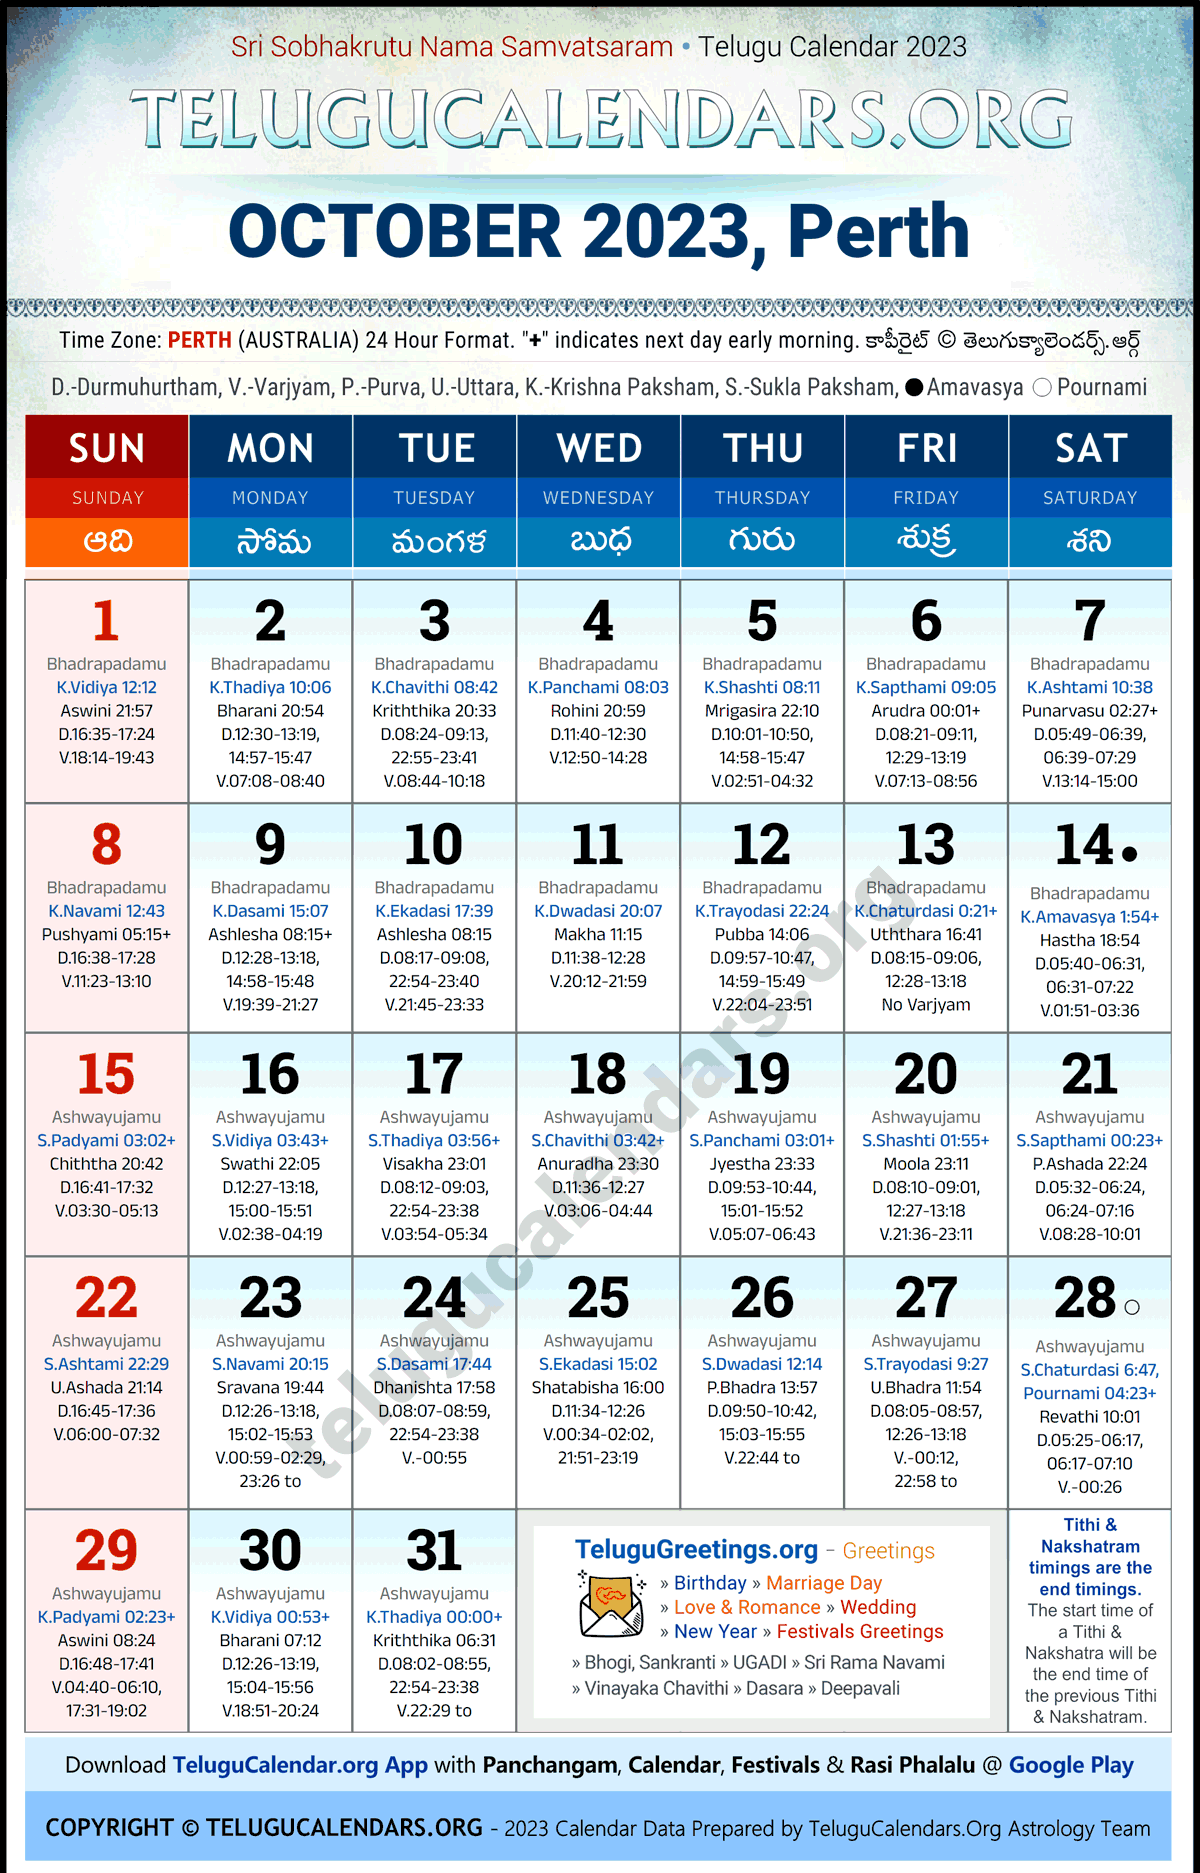 Telugu Calendar 2023 October Festivals for Perth